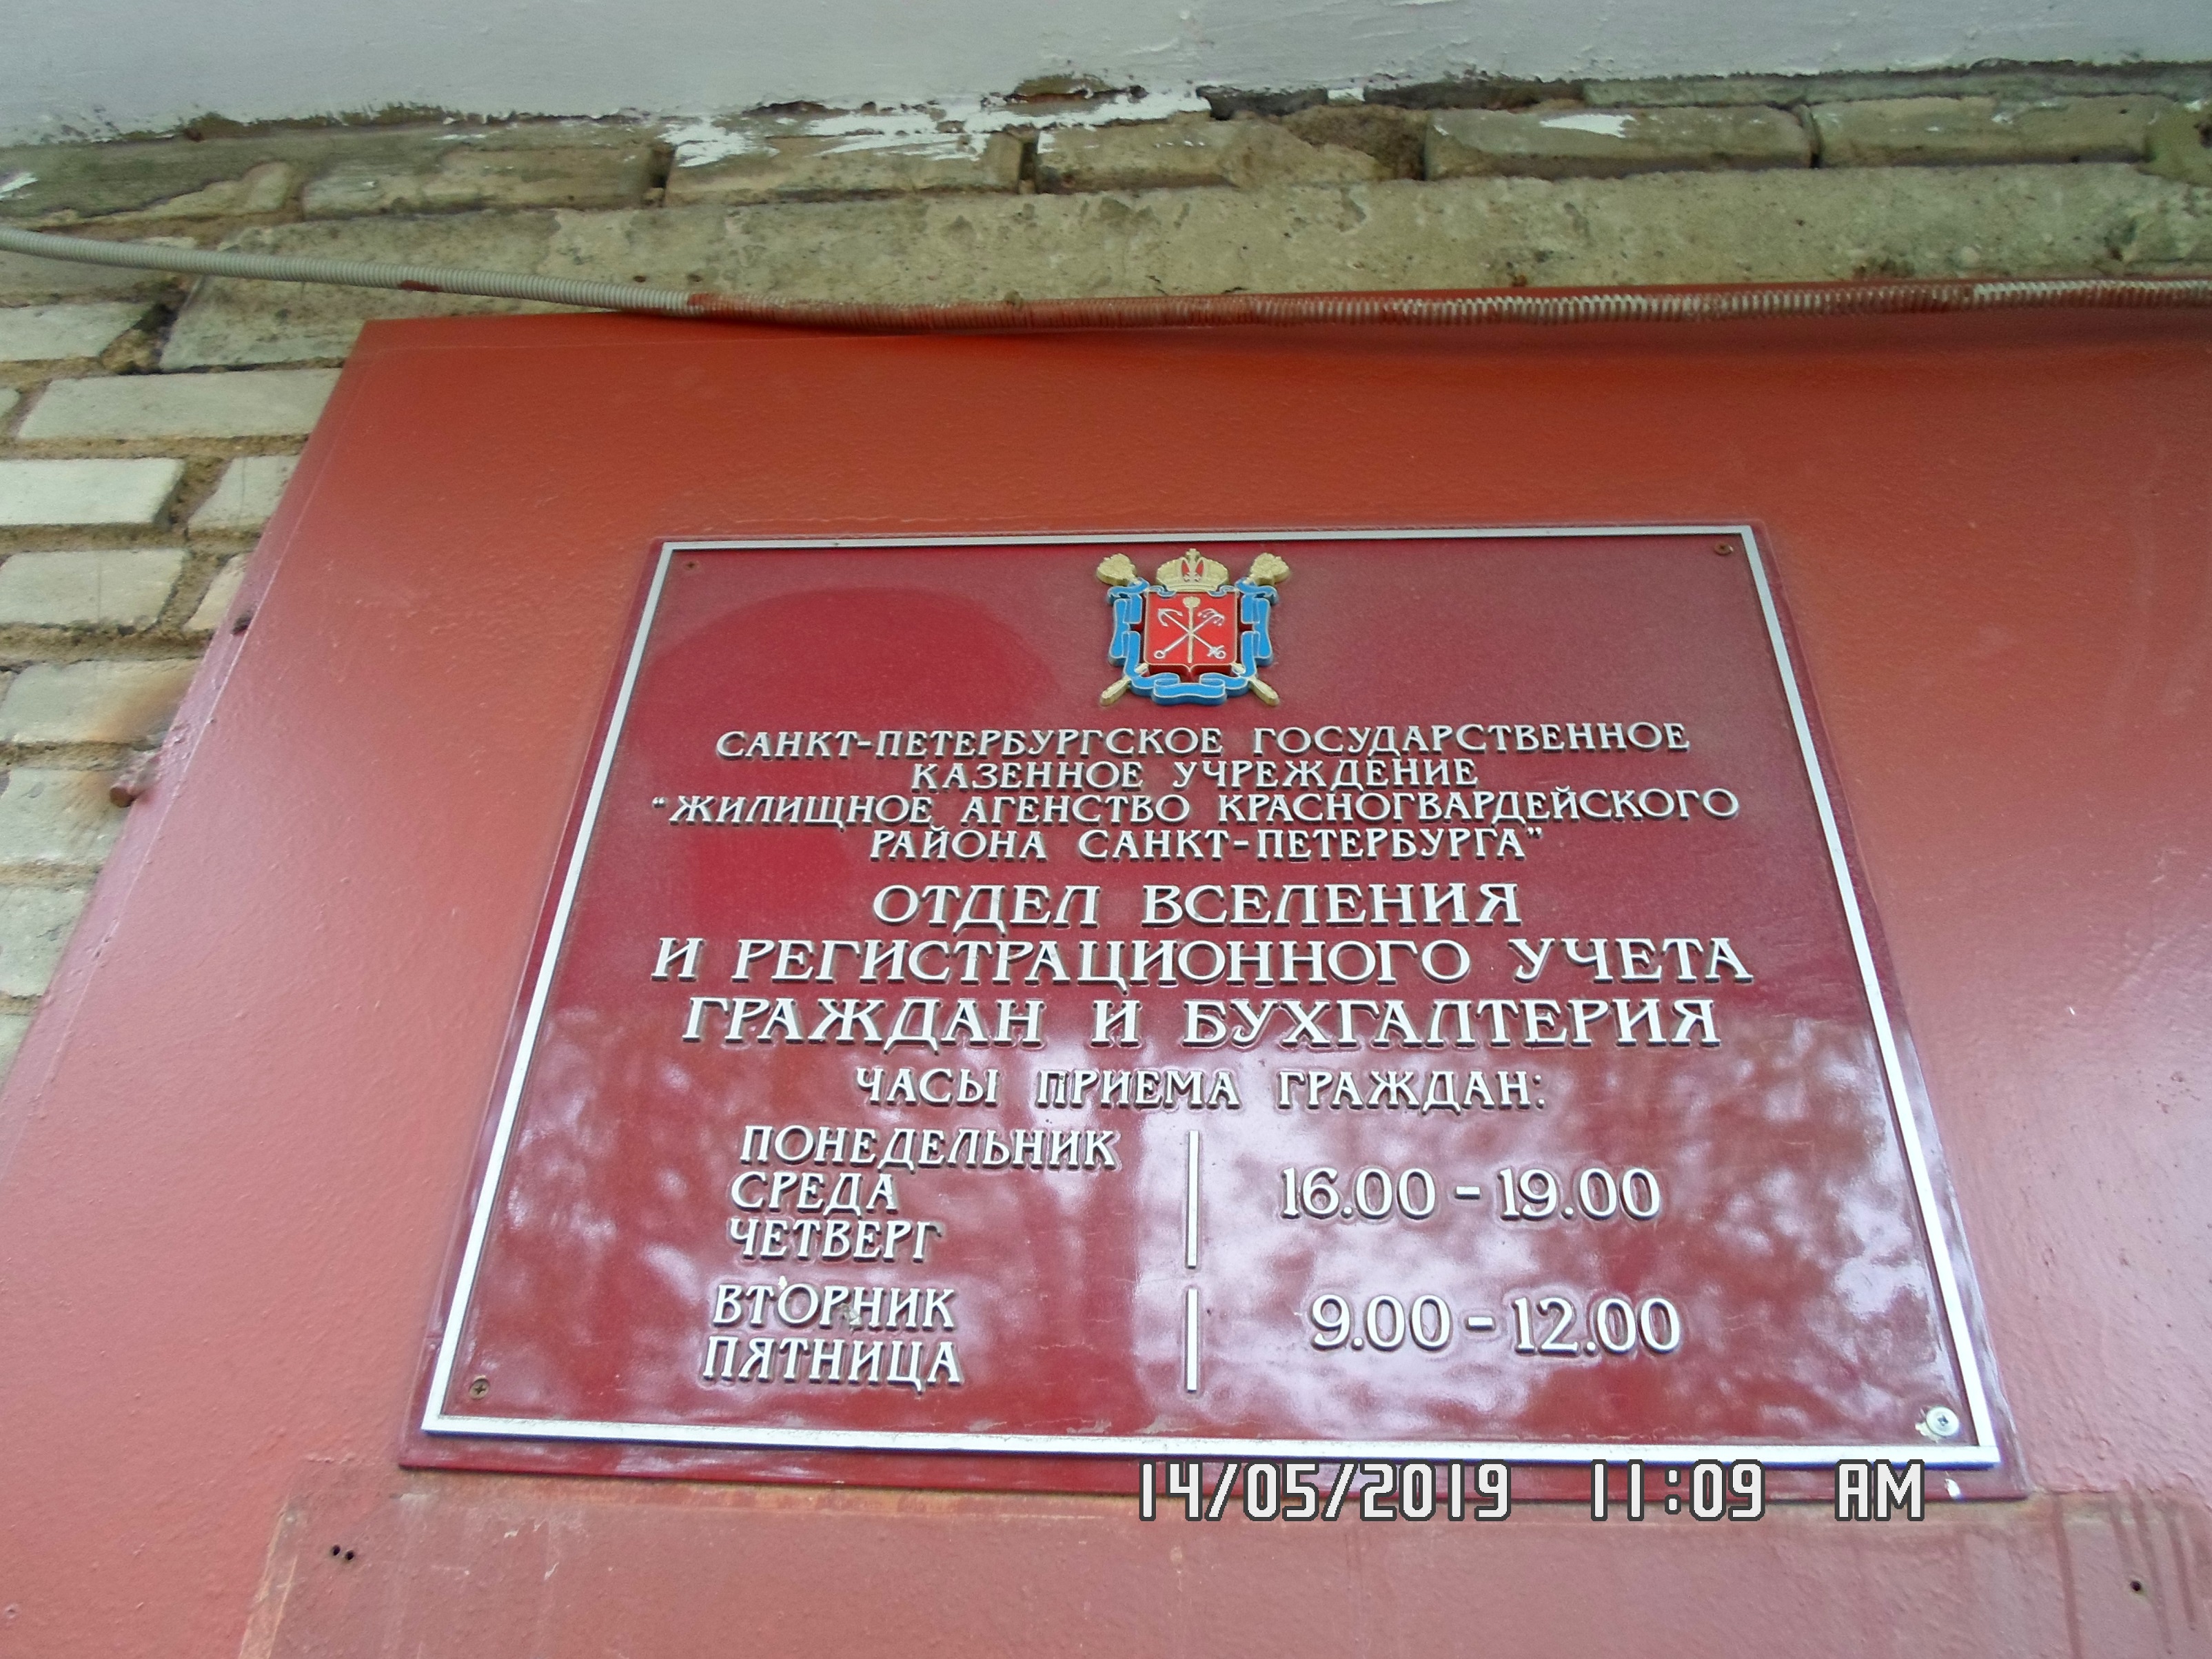 Паспорт стол красногвардейского района